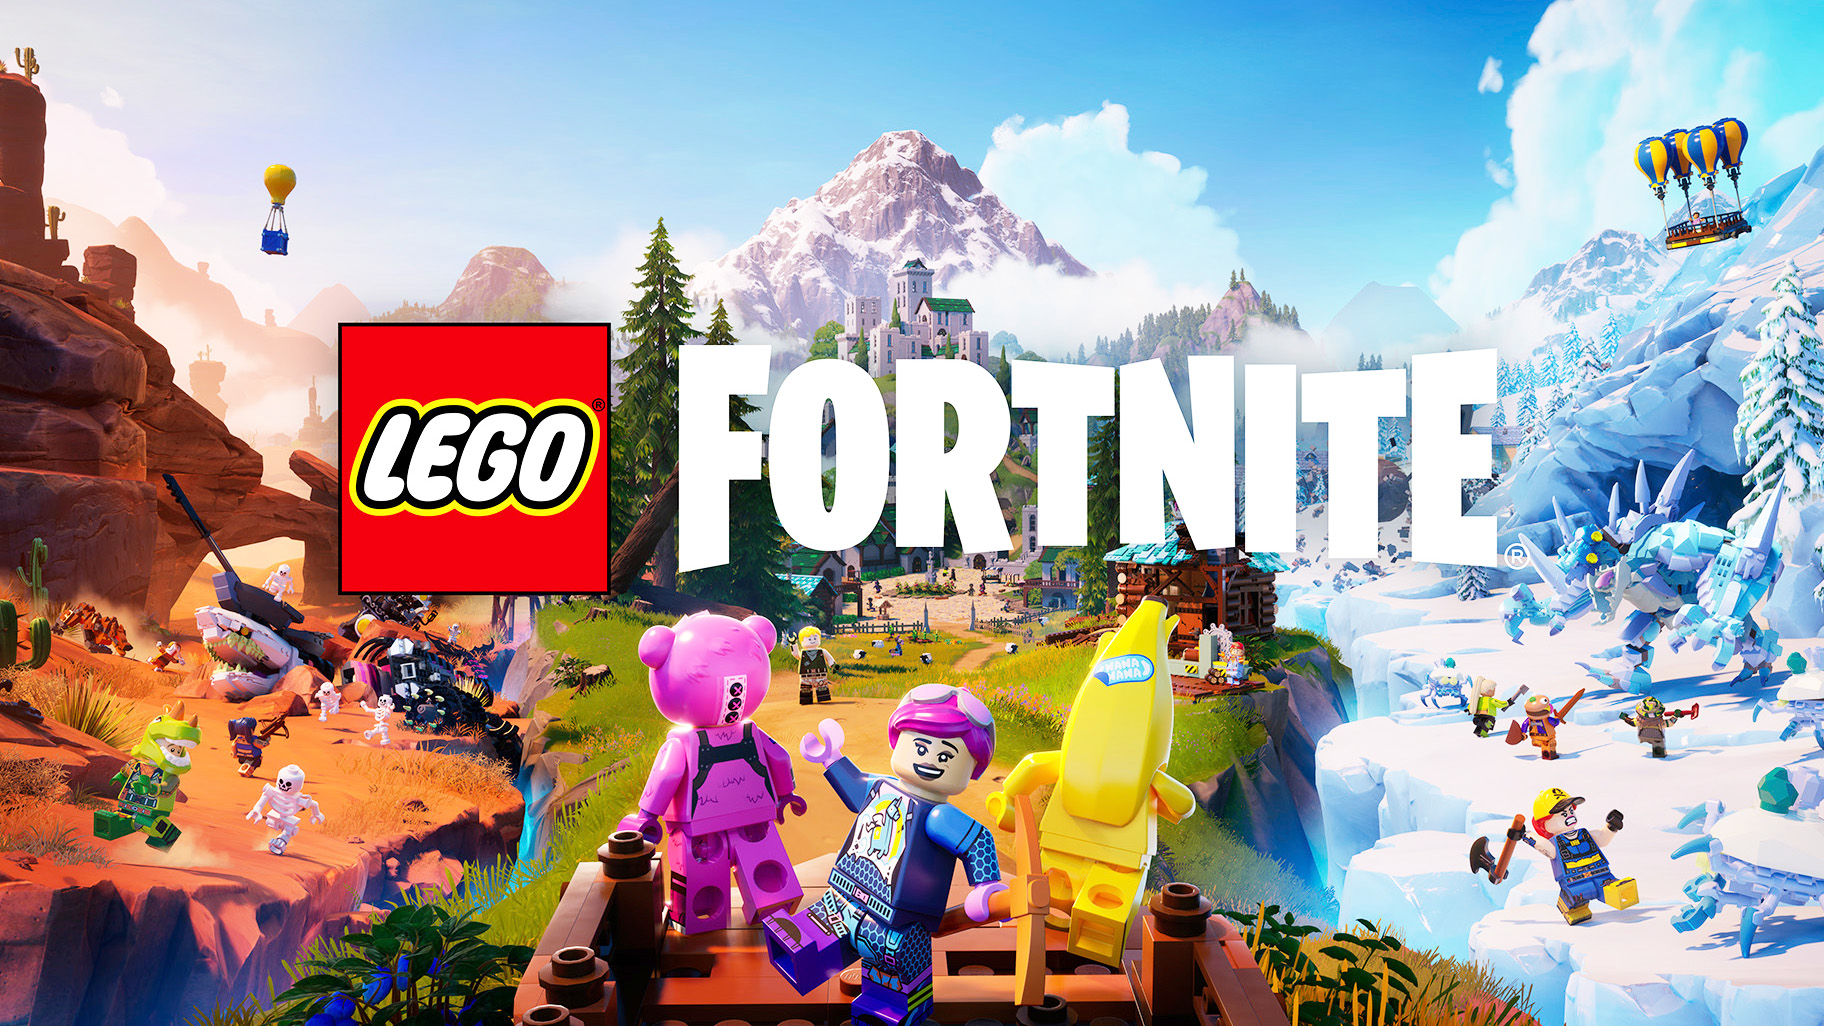 Lego Fortnite, an image of Lego figures on a Fortnite backdrop.